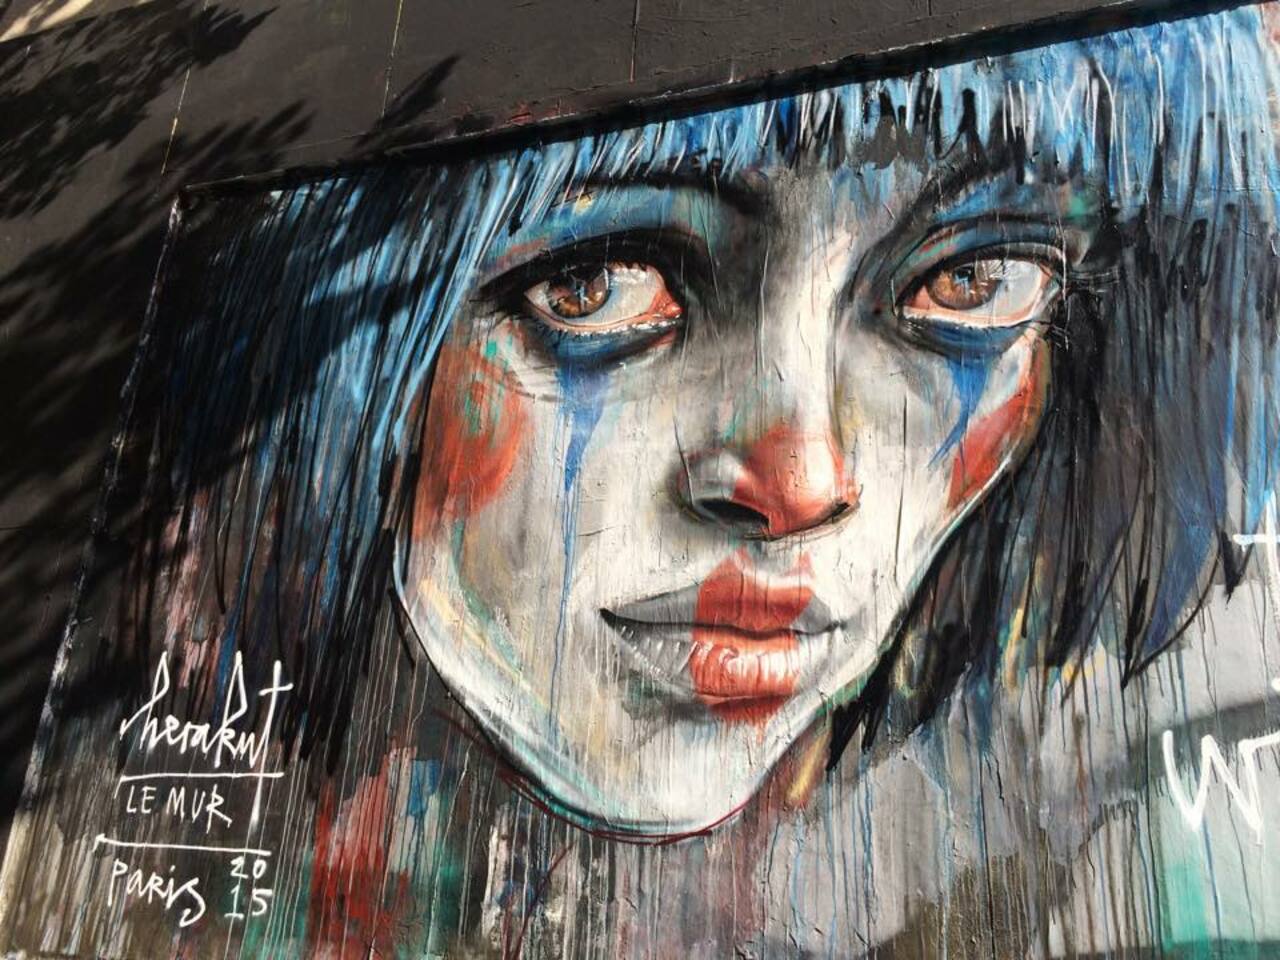 Herakut unveils a new mural in Paris, France for Le Mur. #StreetArt #Graffiti #Mural http://t.co/XhAeiyMw7l